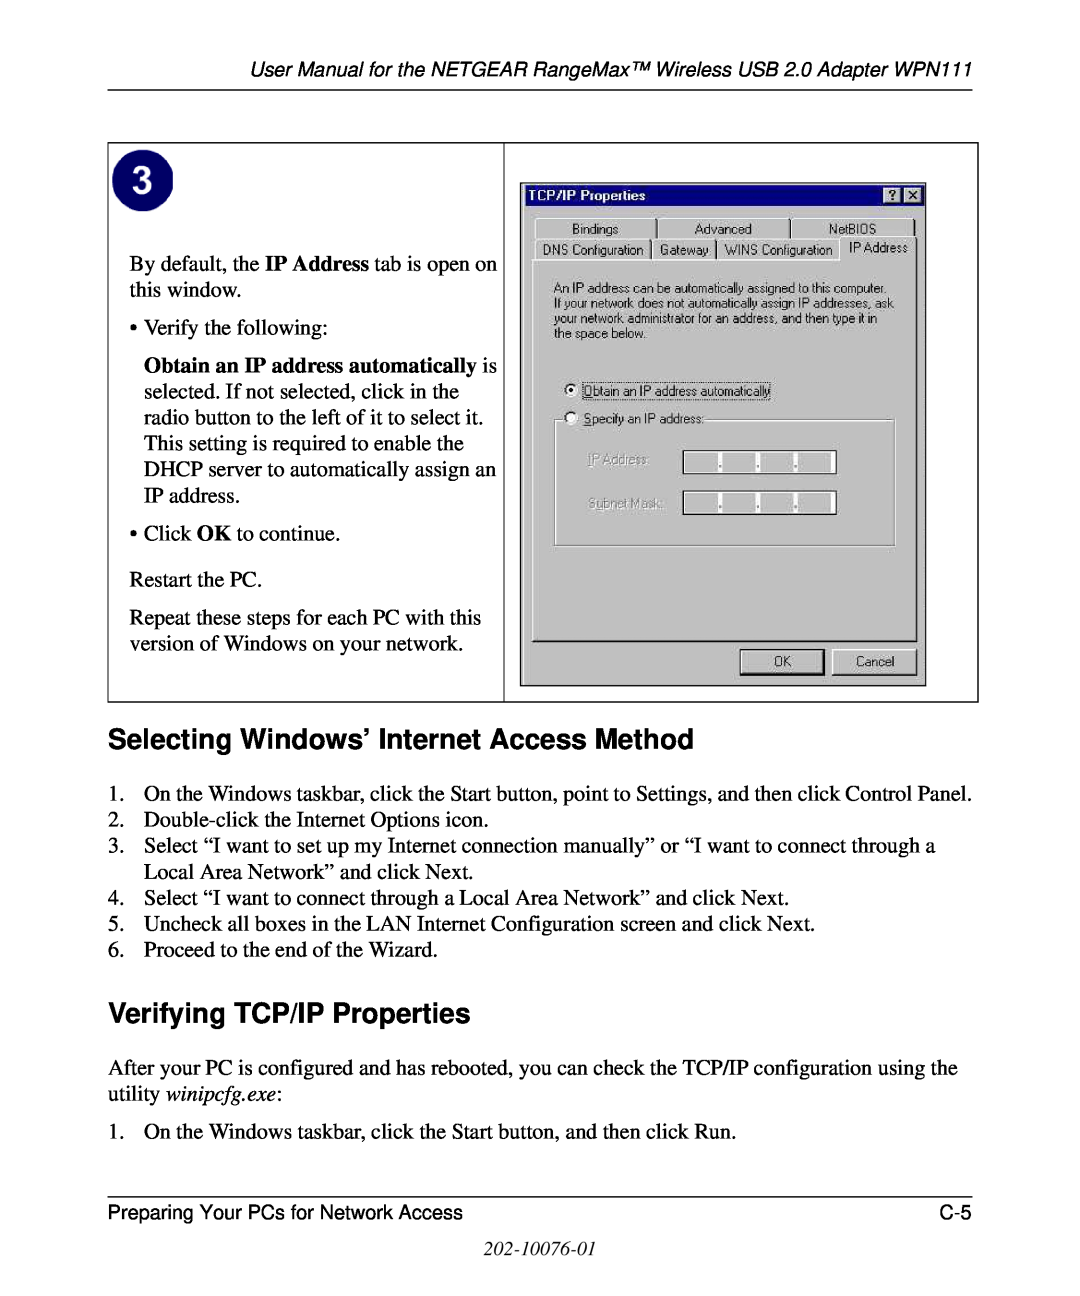 NETGEAR WPN111 user manual Selecting Windows’ Internet Access Method, Verifying TCP/IP Properties 